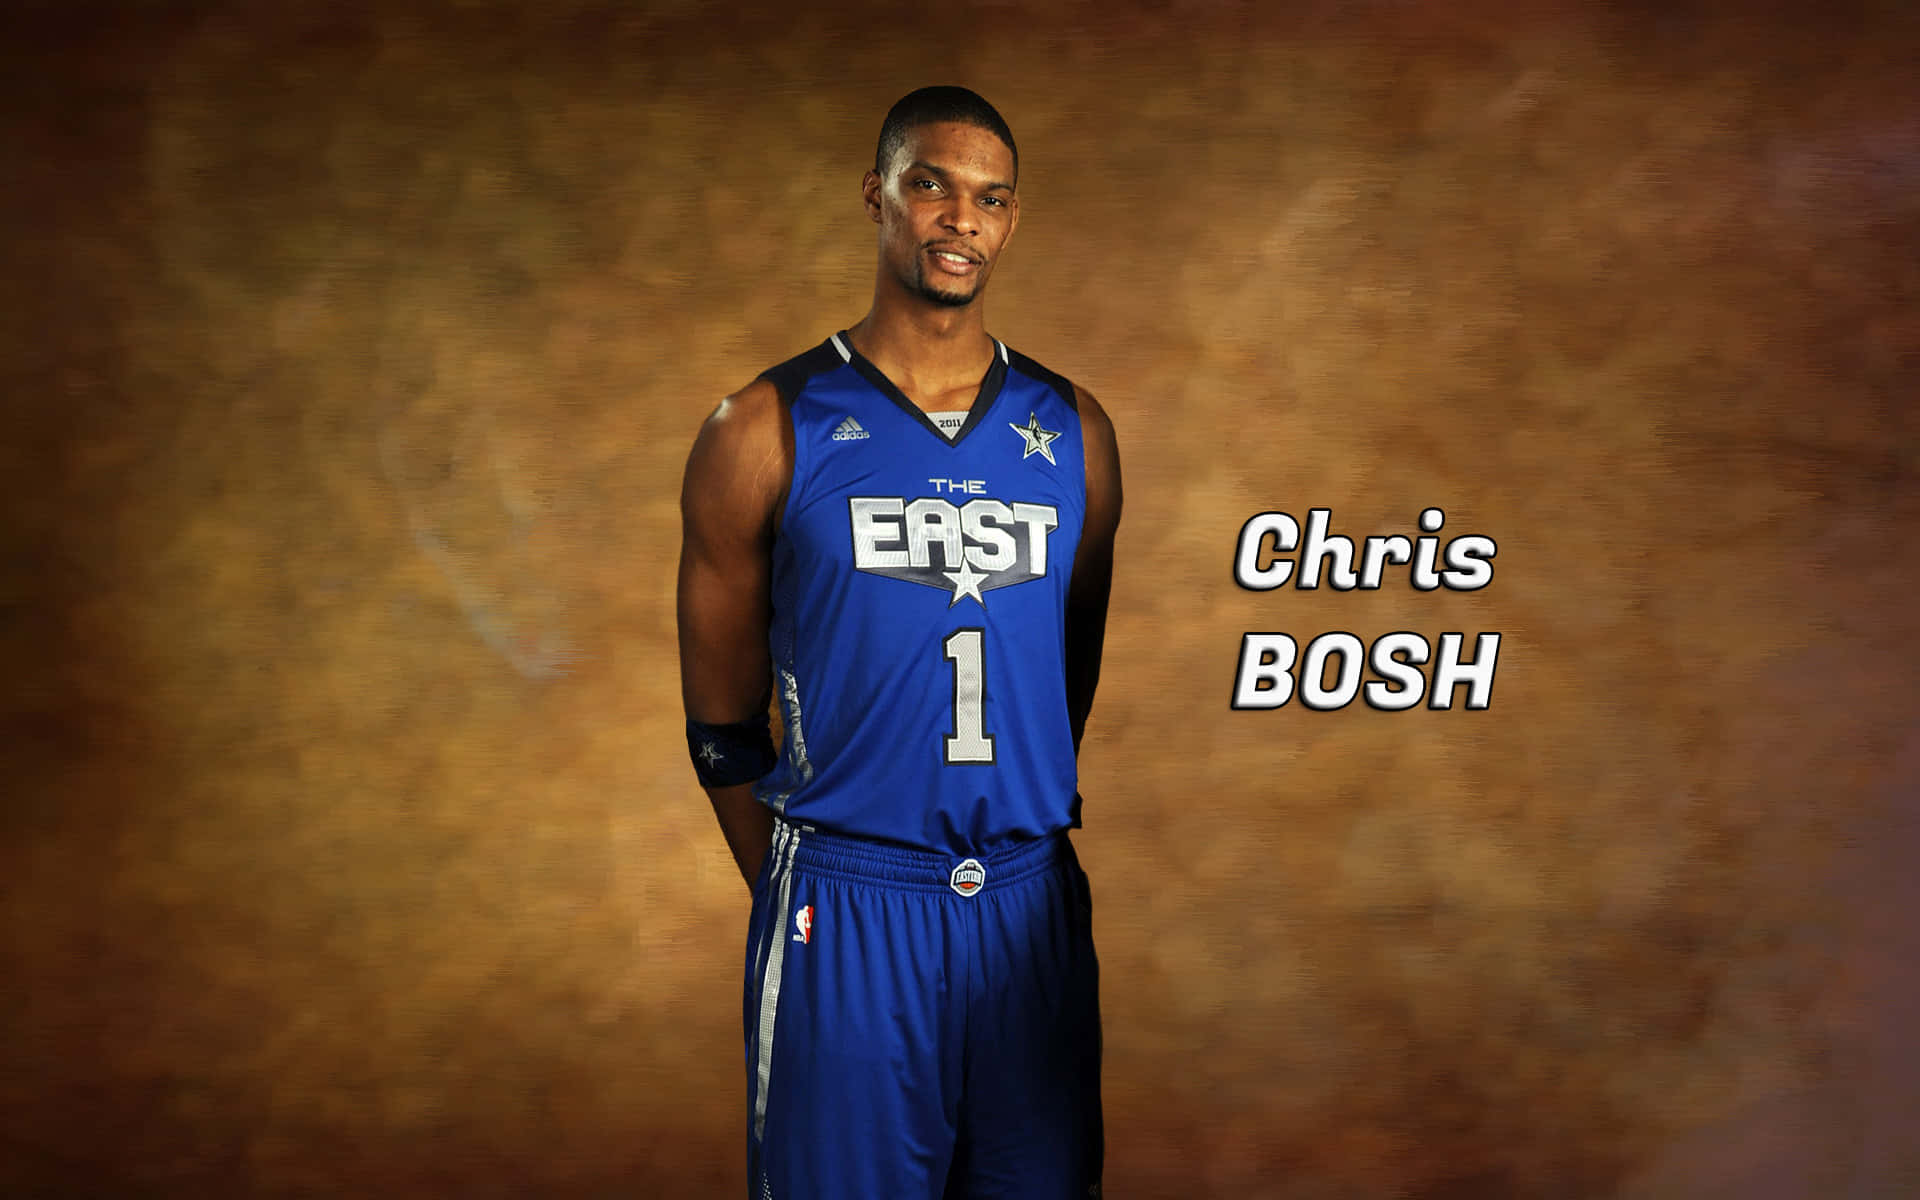 Chris Bosh The East Brown Background Wallpaper